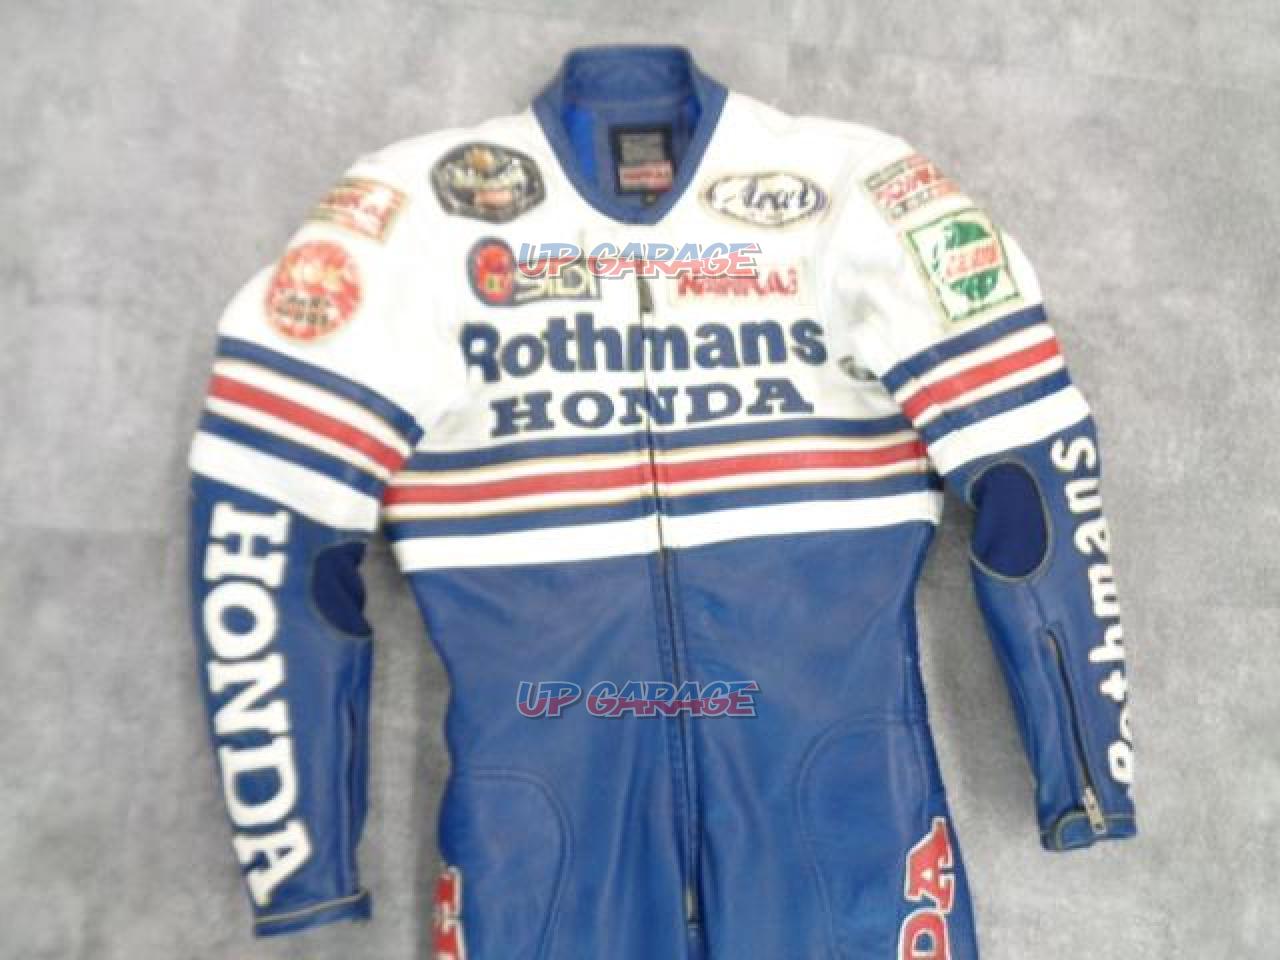 NANKAI ロスマンズ Rothmans HONDA レーシングスーツ Mサイズ 革ツナギ 